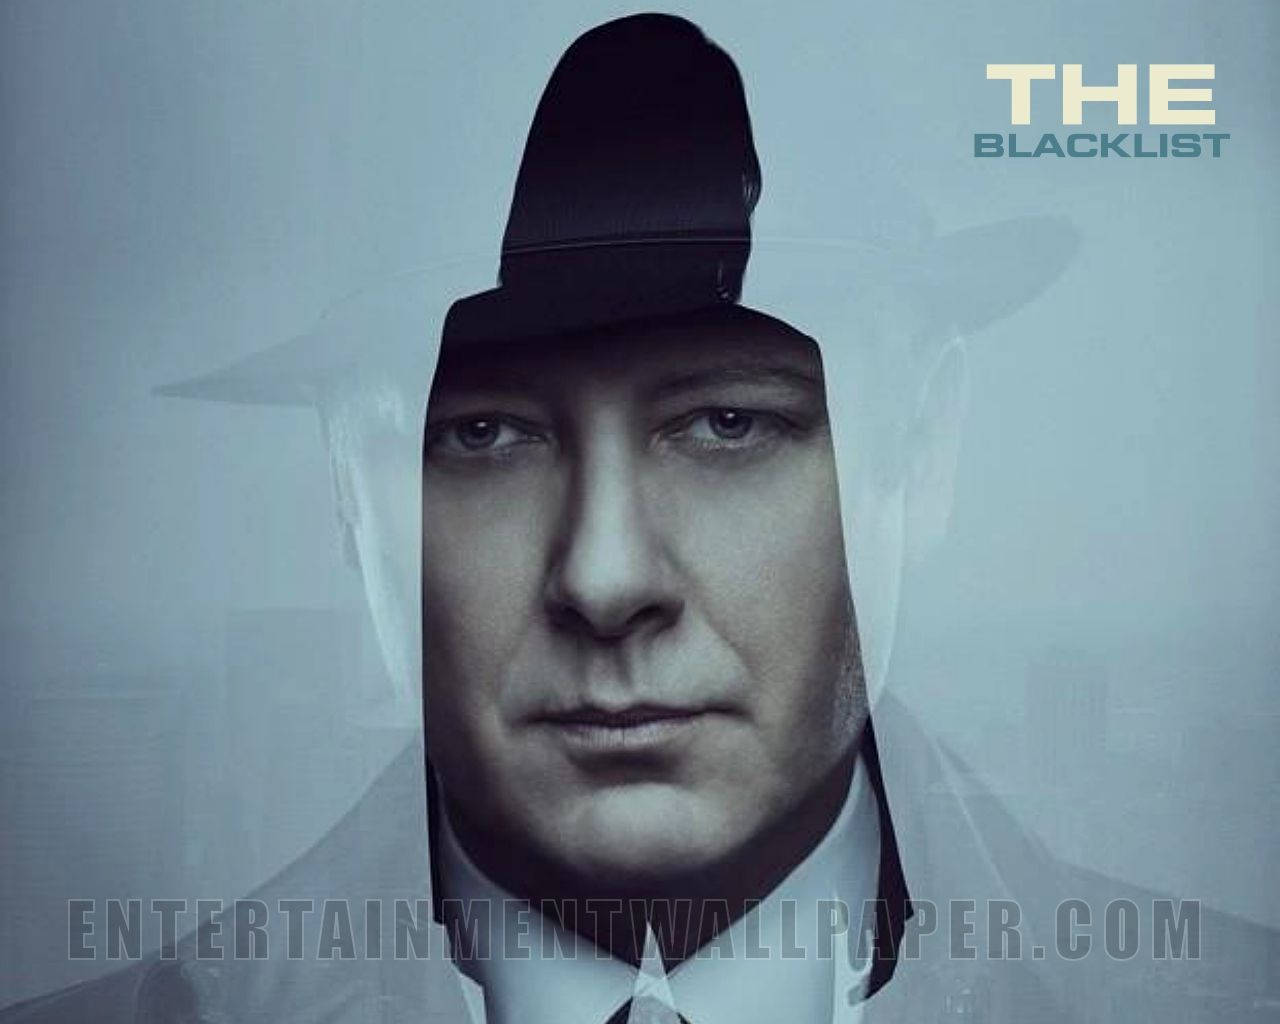 Red Reddington Takes On The Criminal Underworld Background